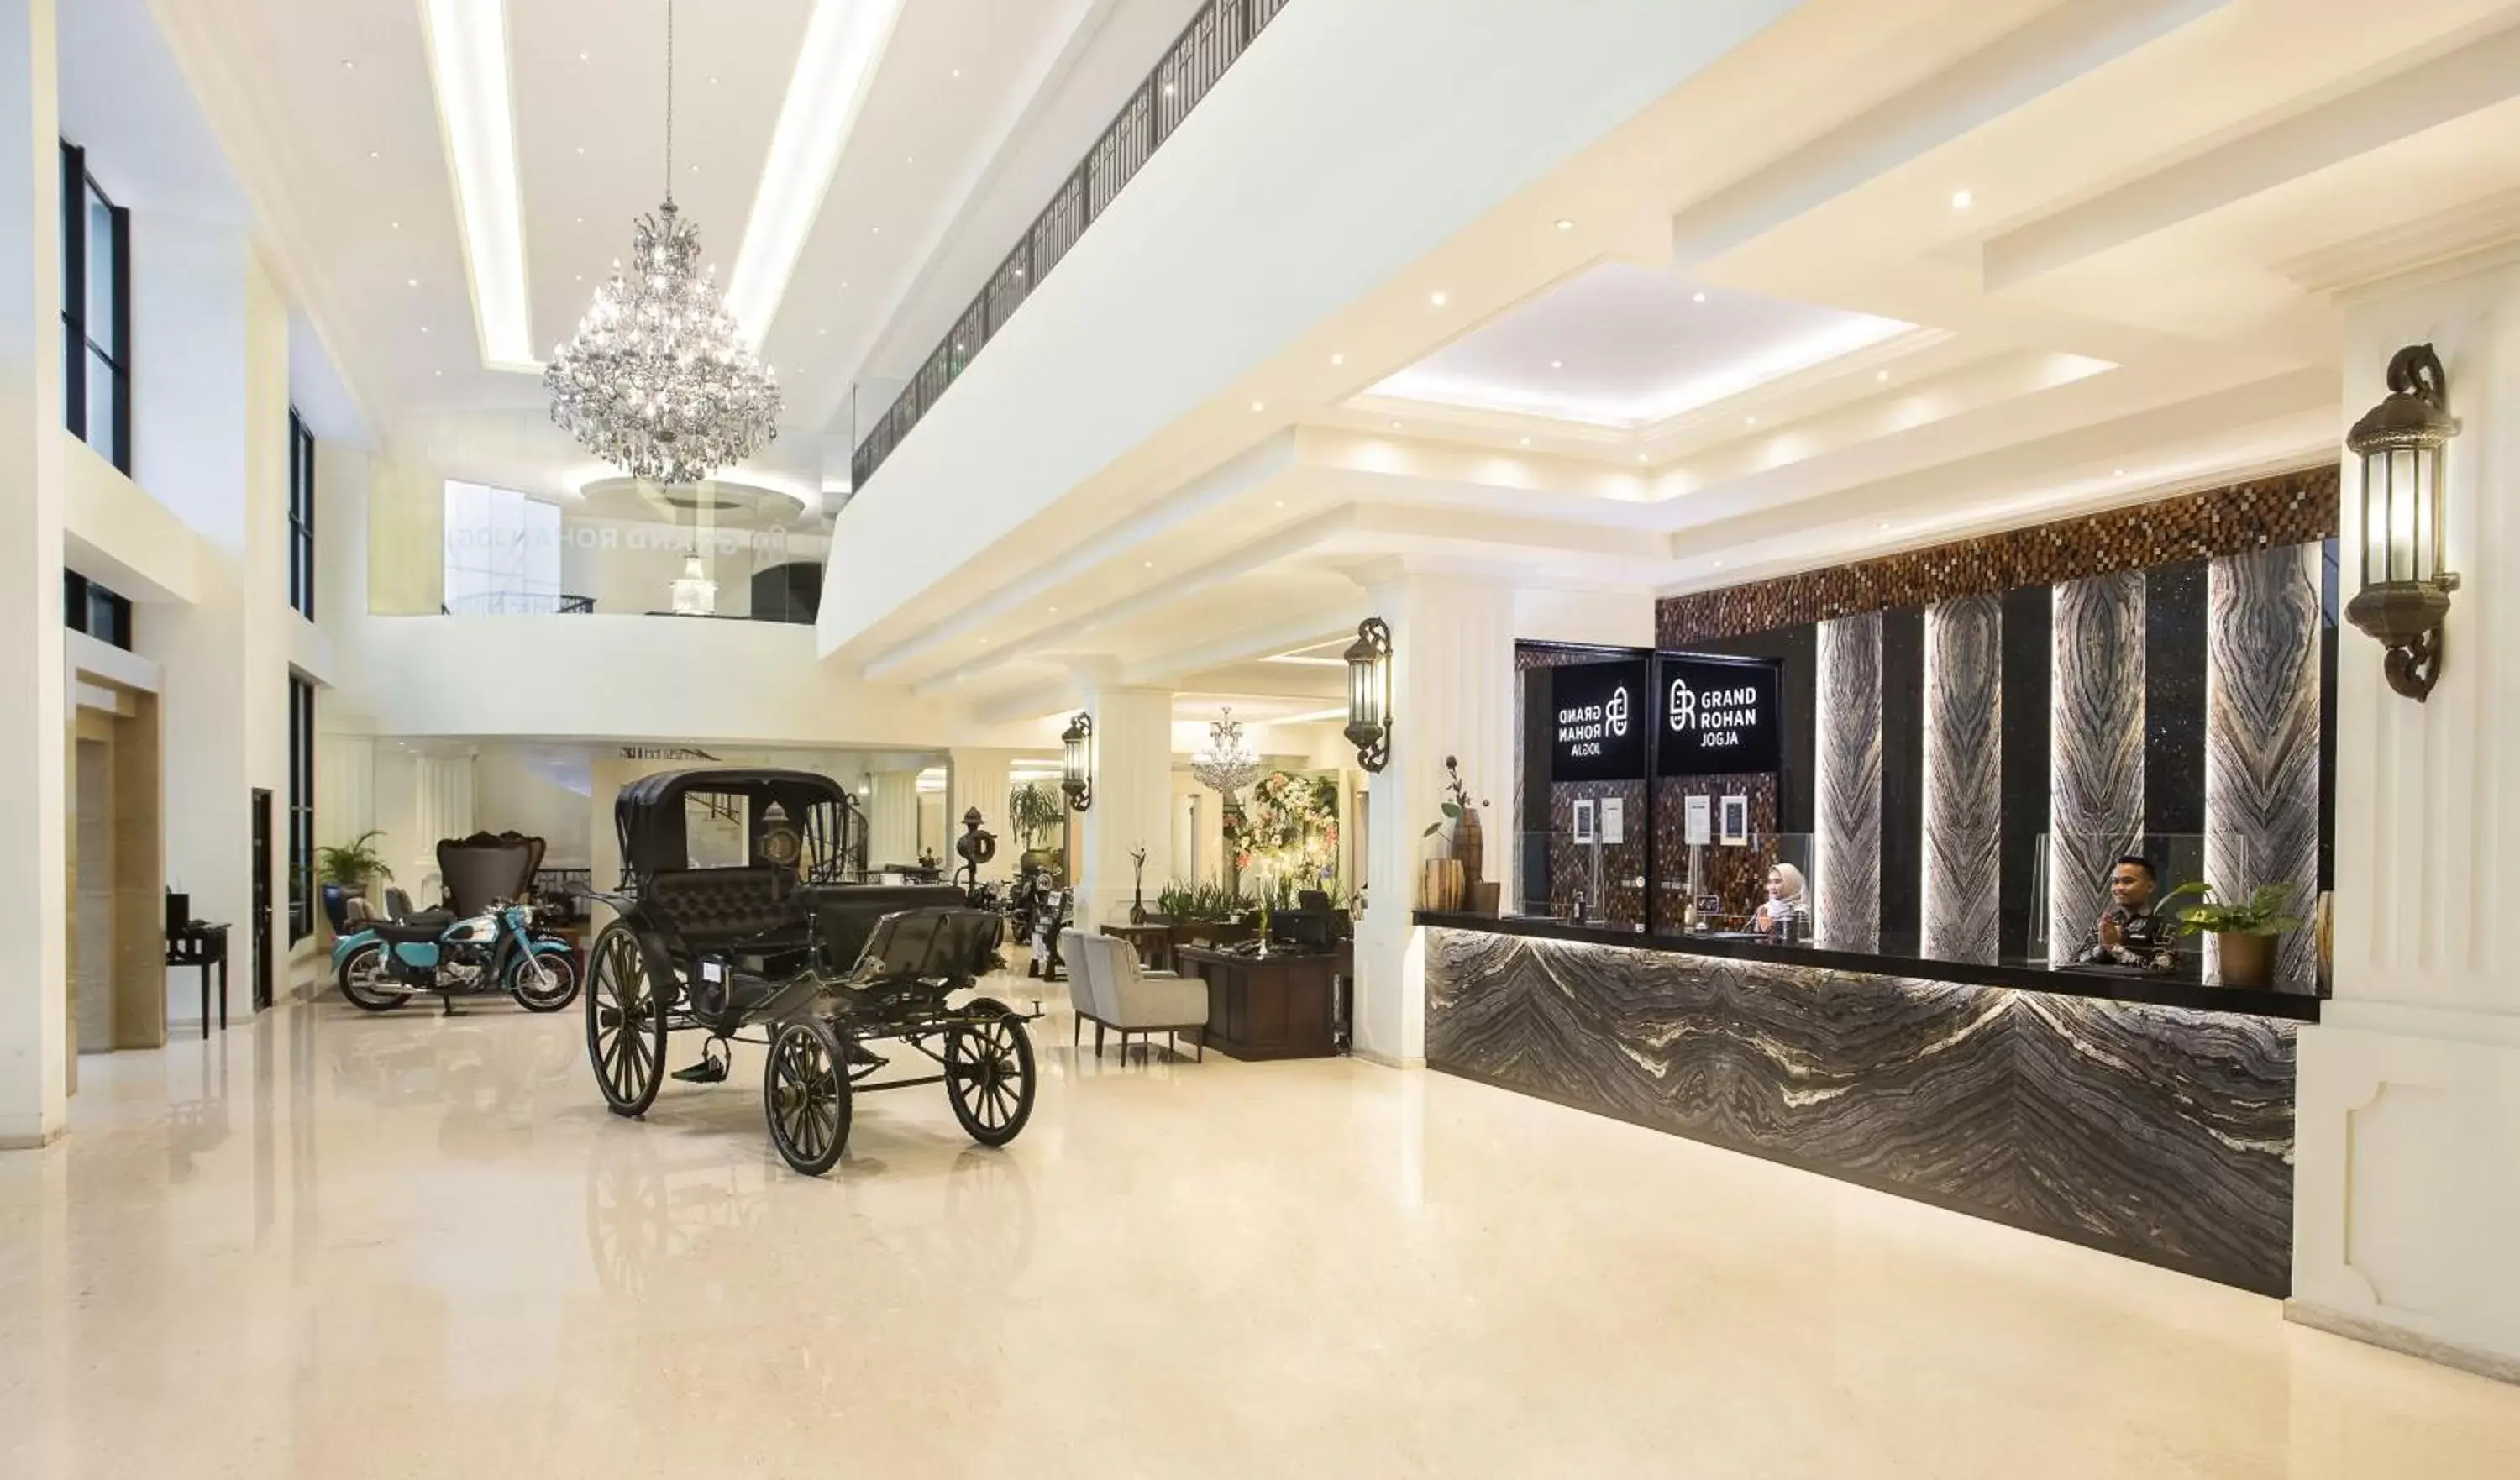 Lobby or reception in Grand Rohan Jogja